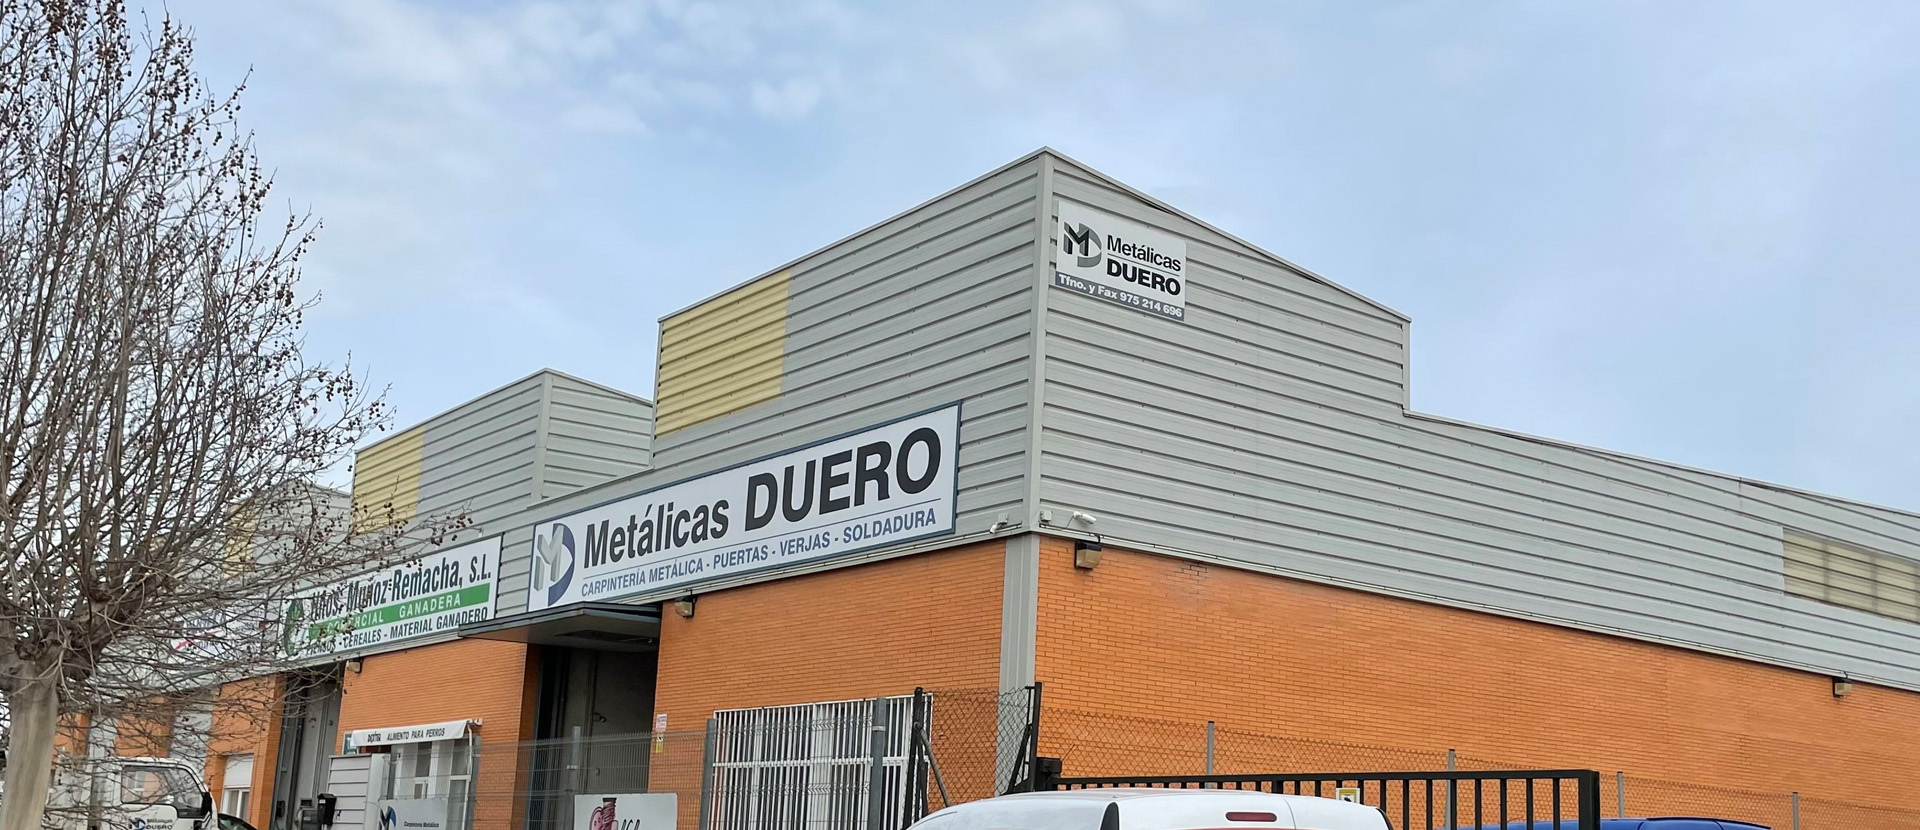 Metálicas Duero Soria: METALICAS DUERO EN SORIA